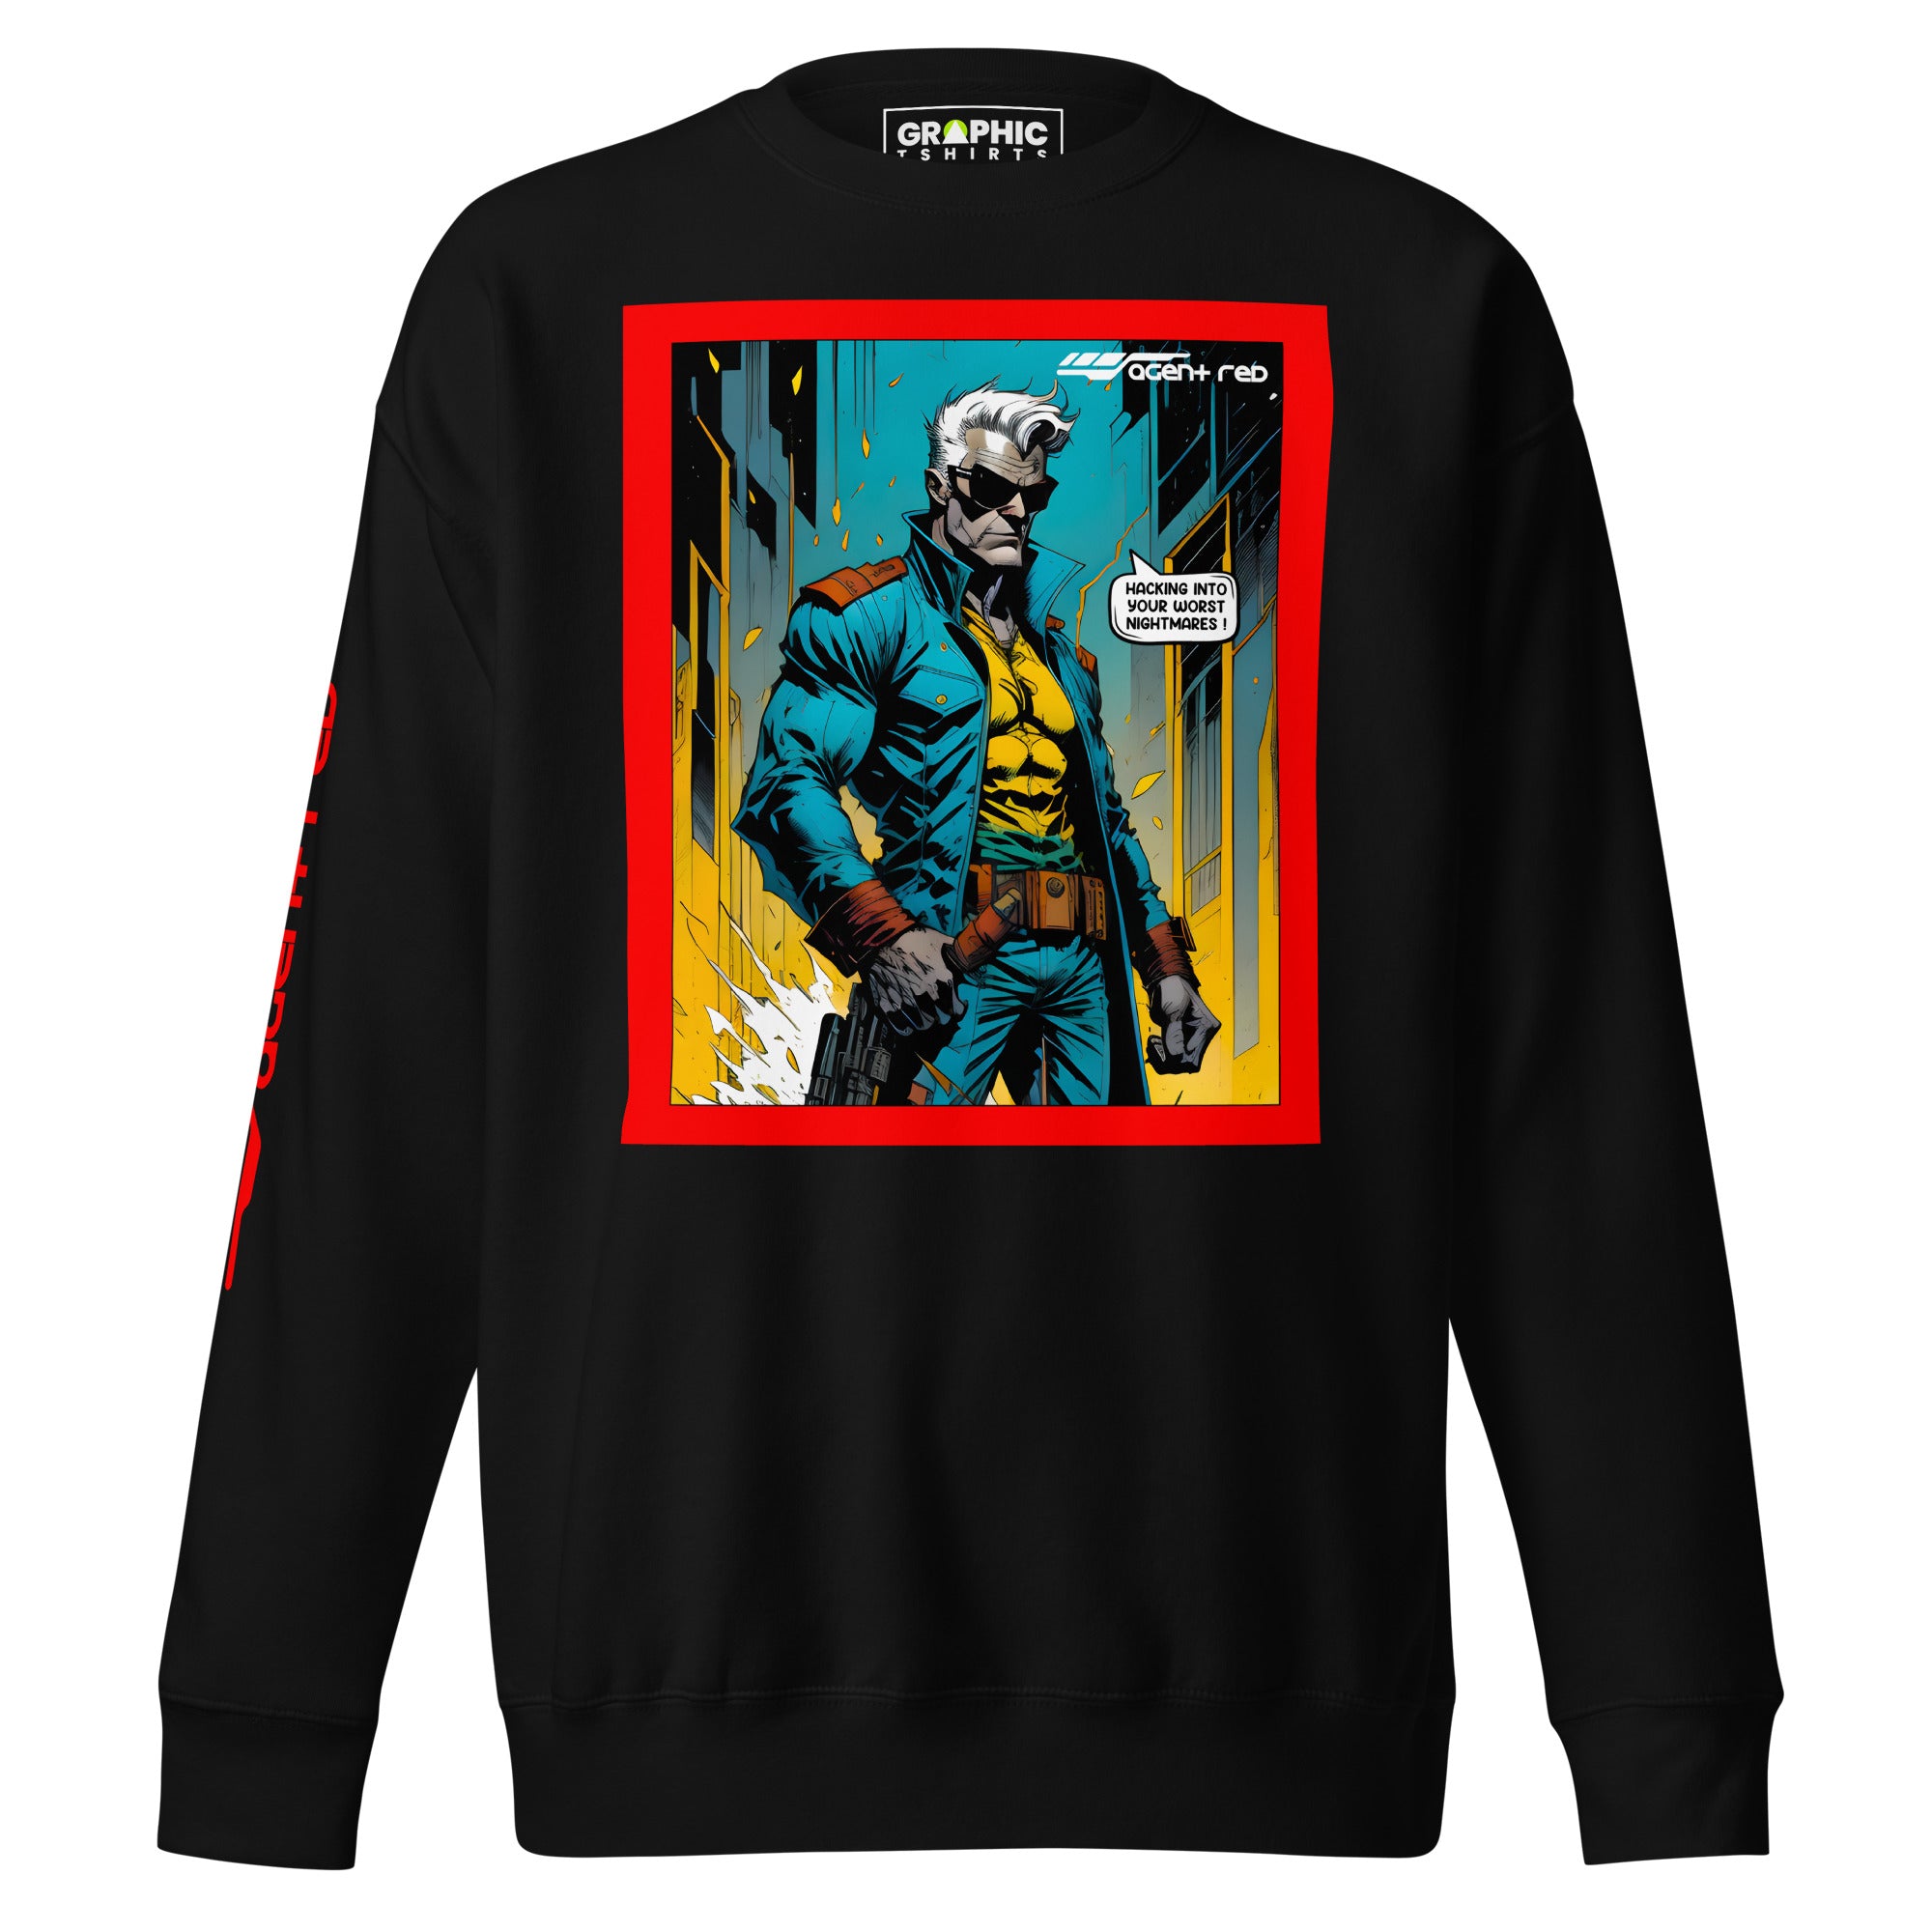 Unisex Premium Sweatshirt - Agent Red Cyberpunk Series v.27